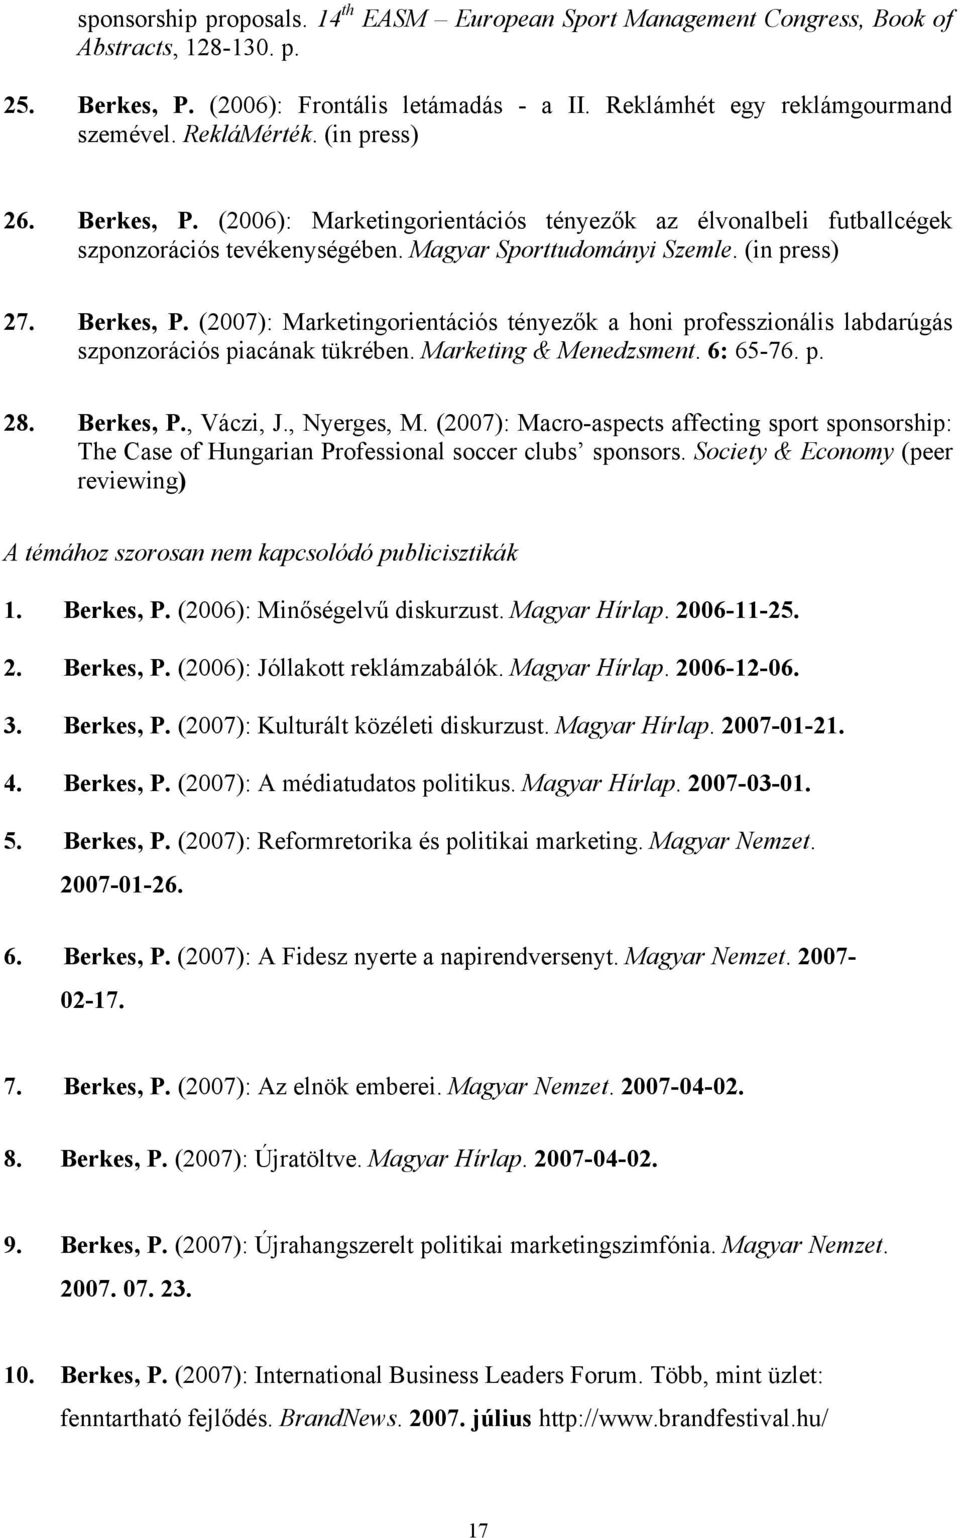 Marketing & Menedzsment. 6: 65-76. p. 28. Berkes, P., Váczi, J., Nyerges, M. (2007): Macro-aspects affecting sport sponsorship: The Case of Hungarian Professional soccer clubs sponsors.